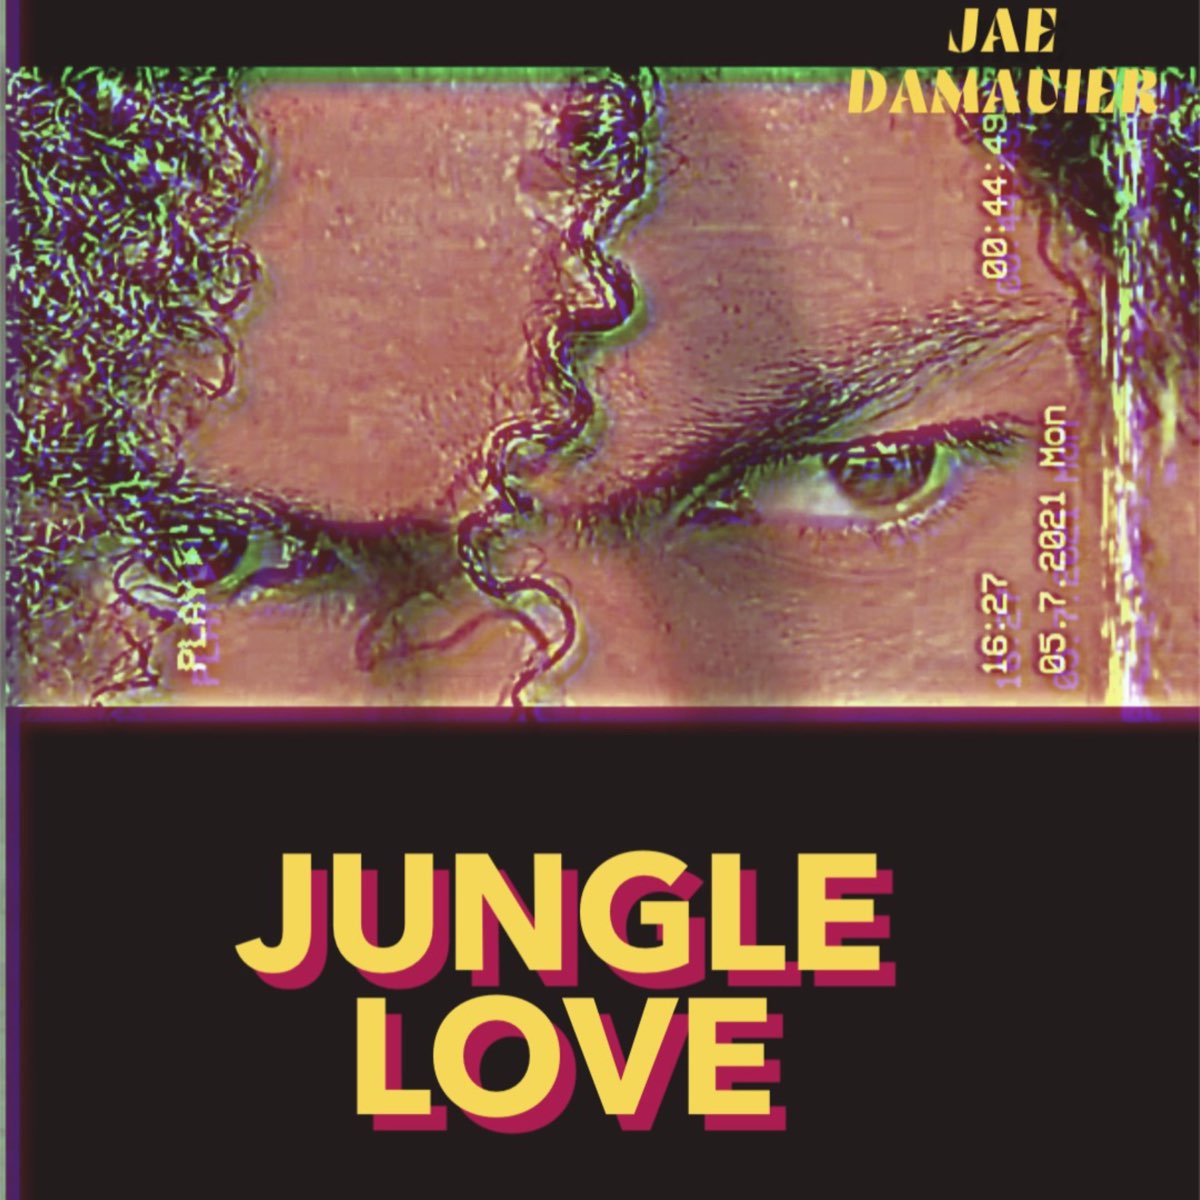 Jungle love. Jungle альбом. Jae what Love does.